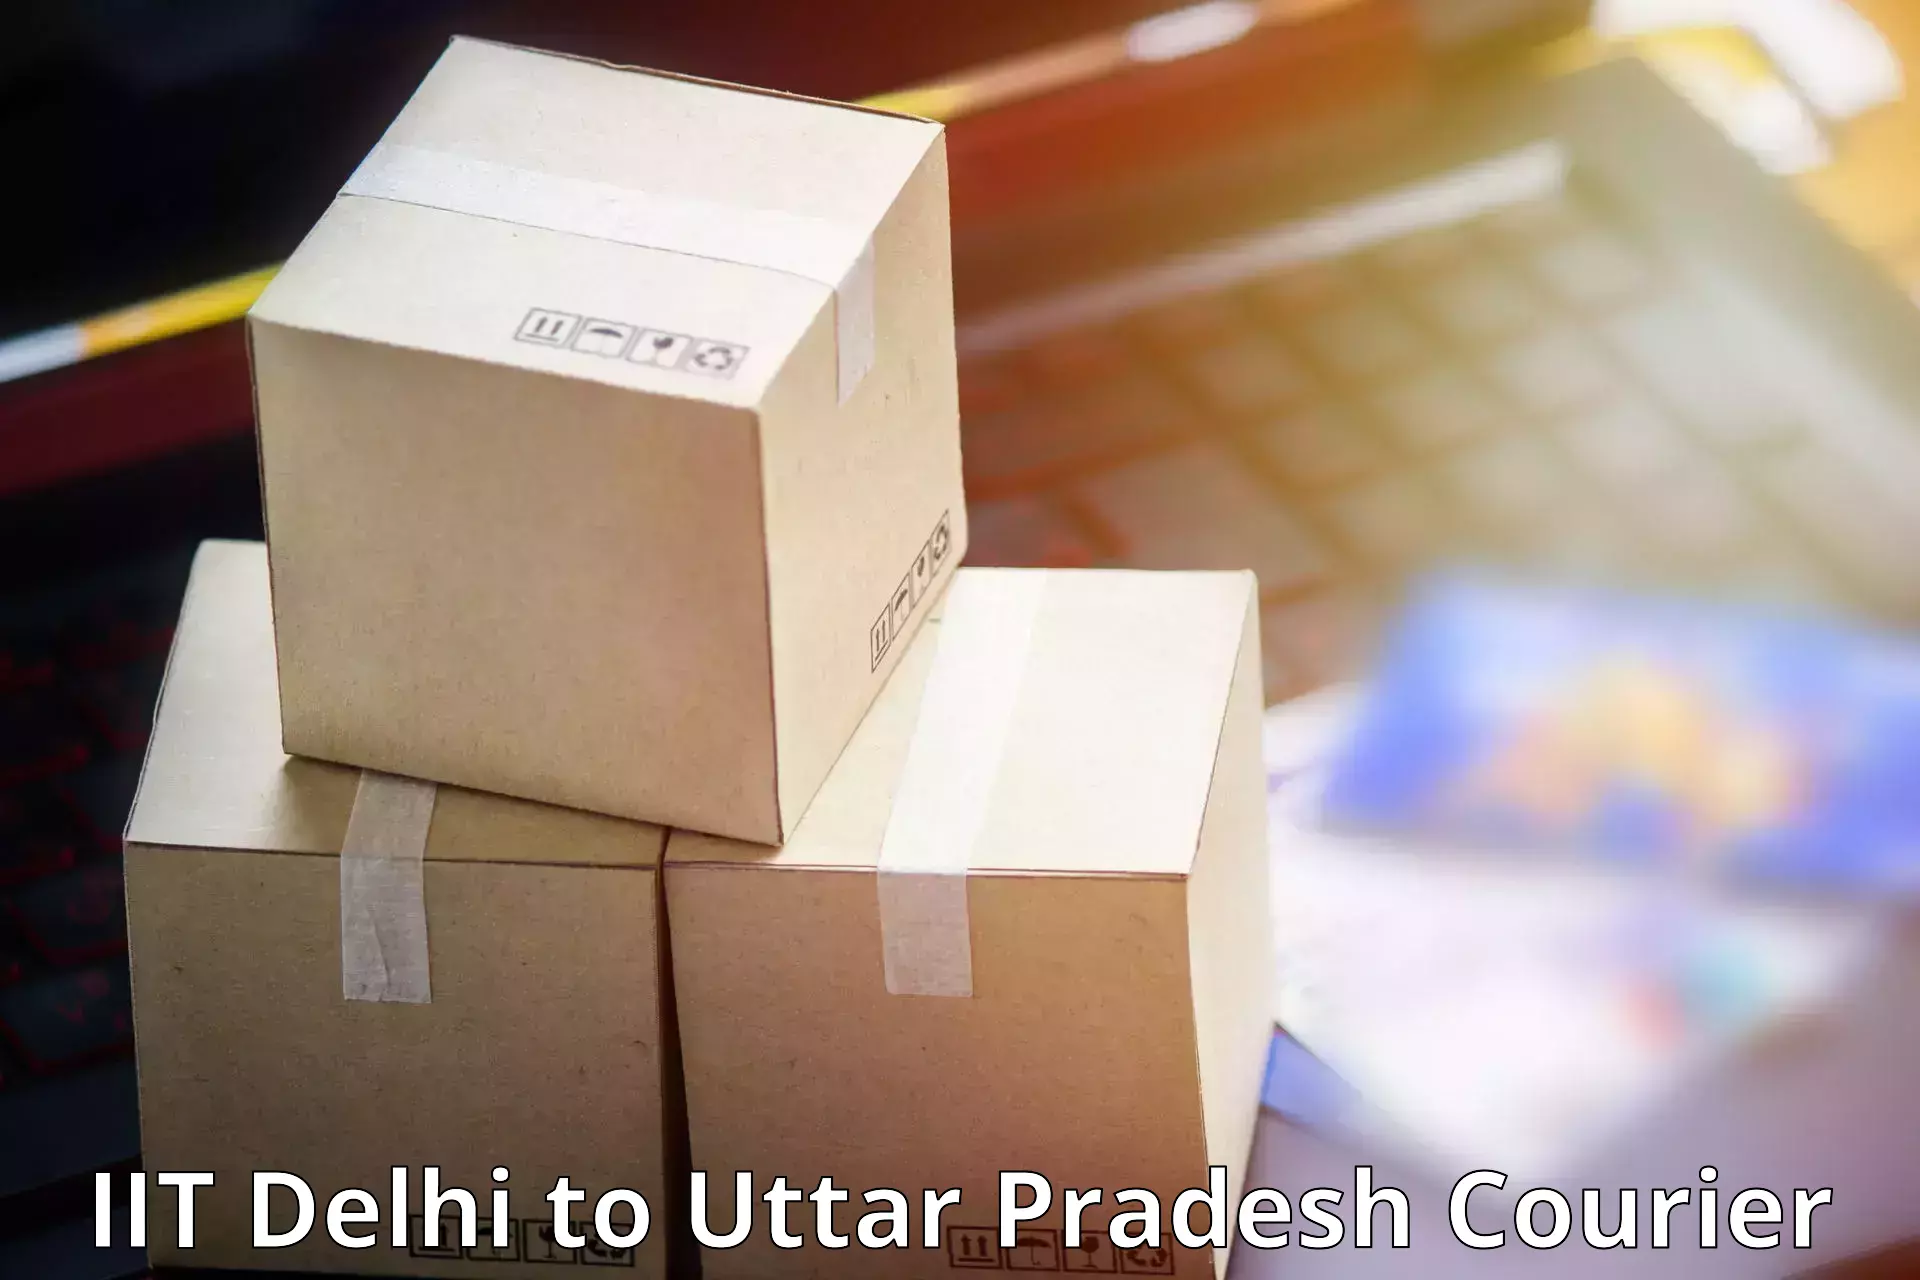 Speedy delivery service IIT Delhi to Agra